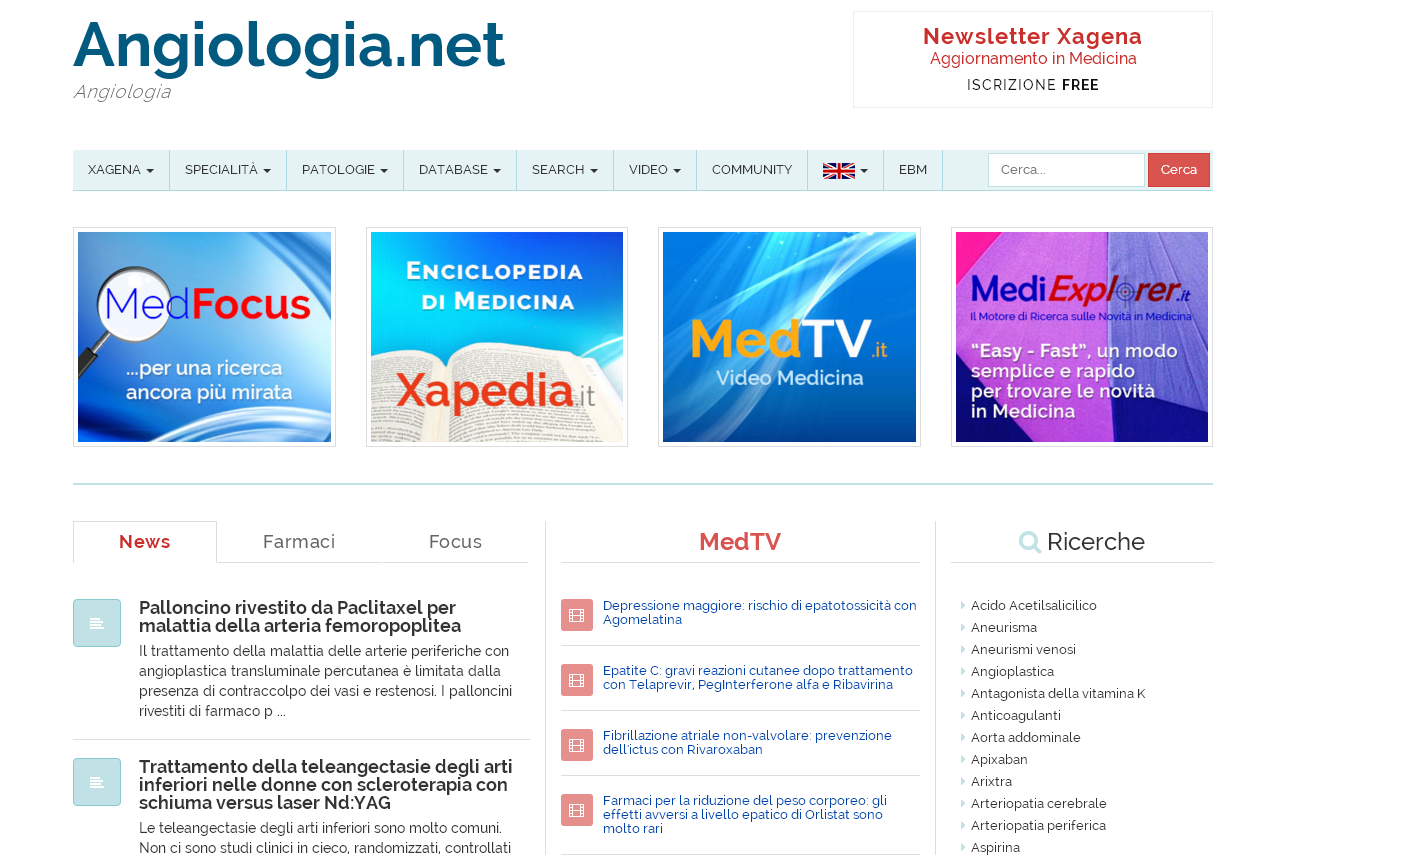 Angiologia.net